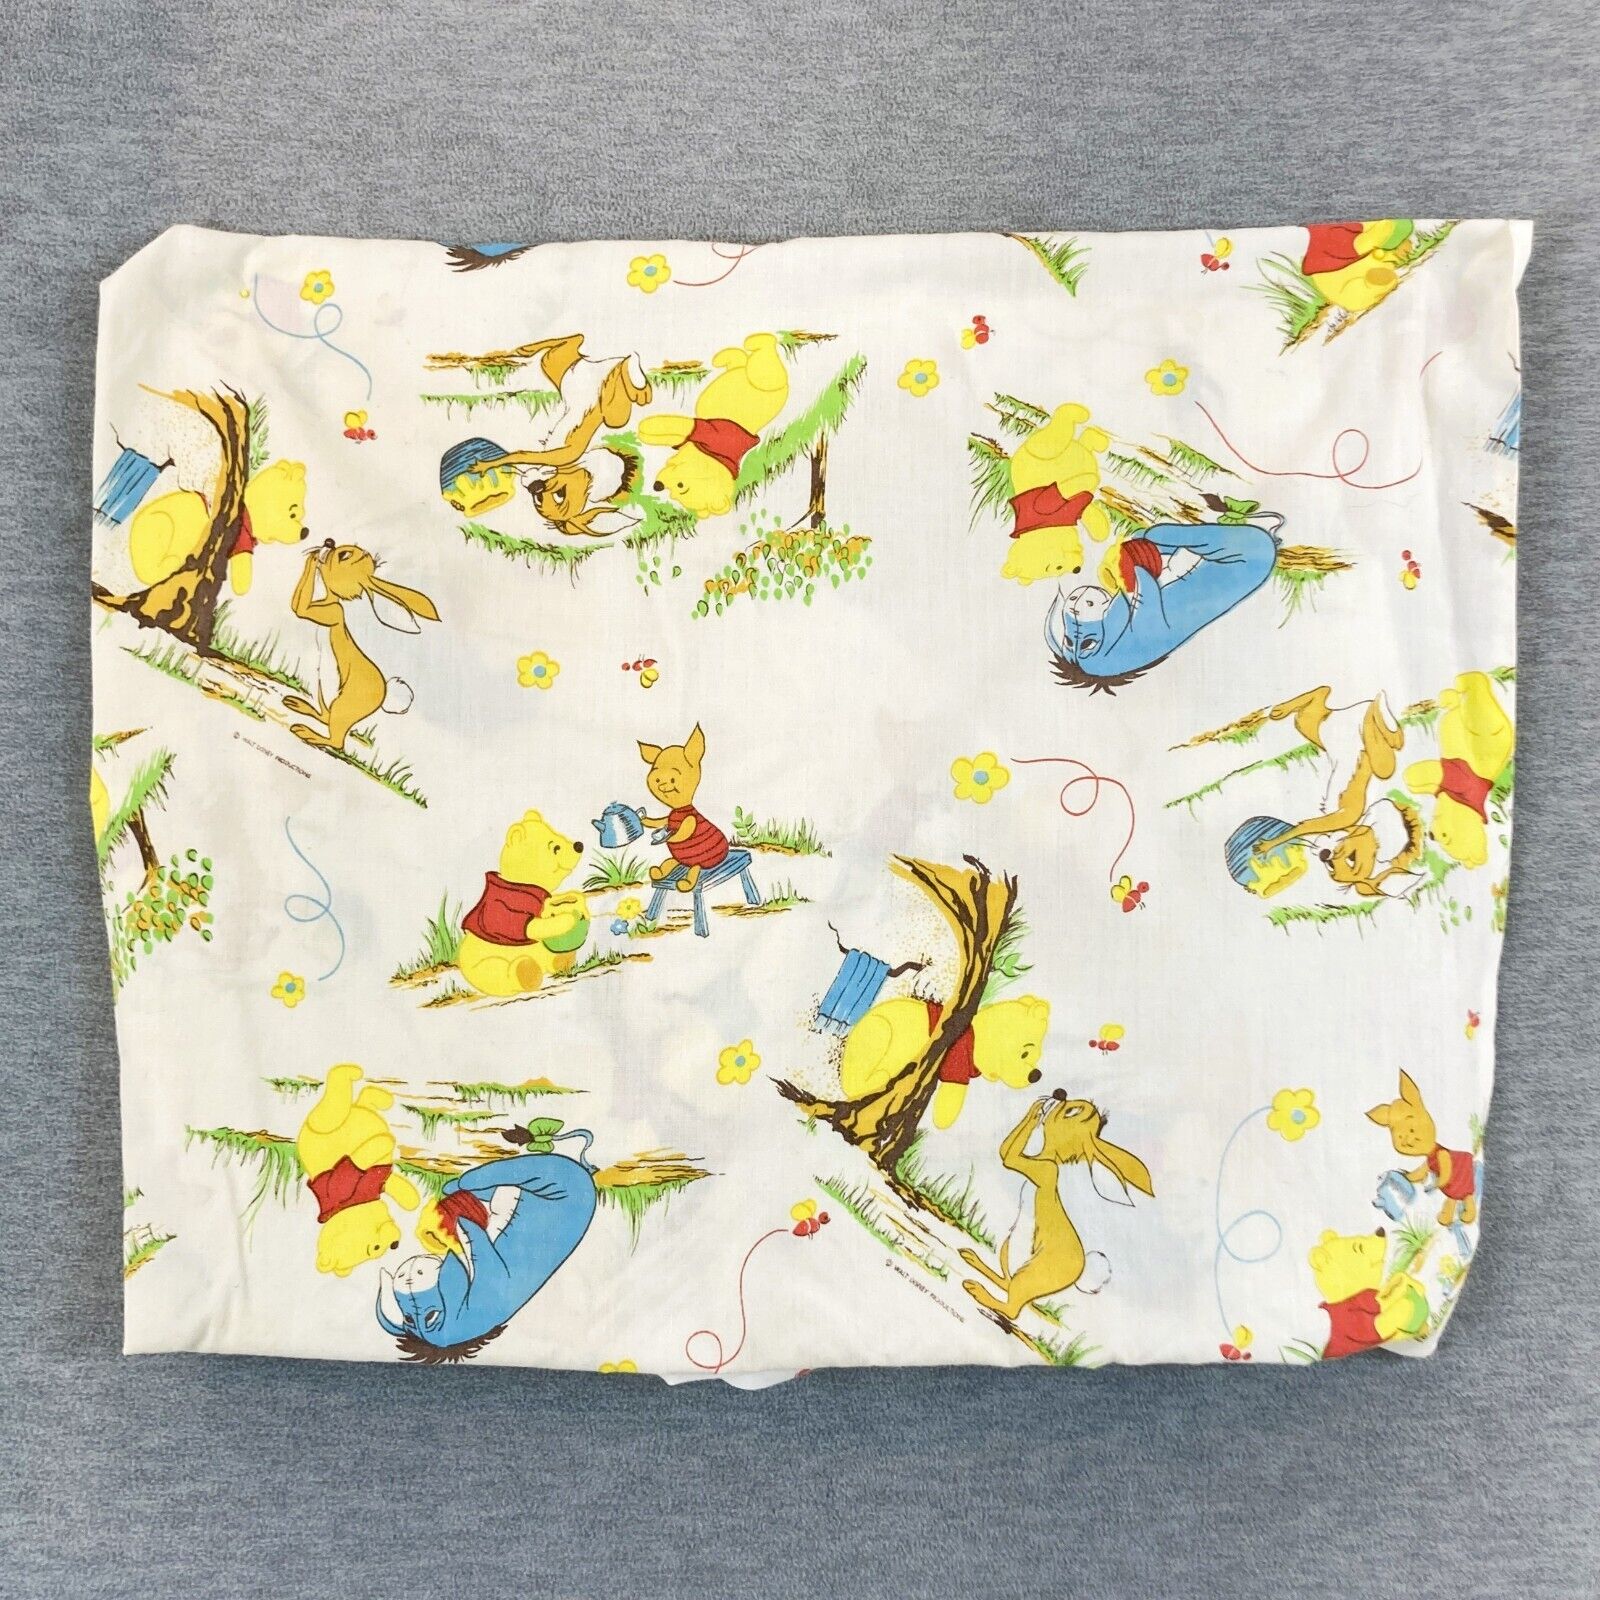 Vtg DISNEY Winnie the Pooh Flat Sheet Sears Roebuck Project Fabric